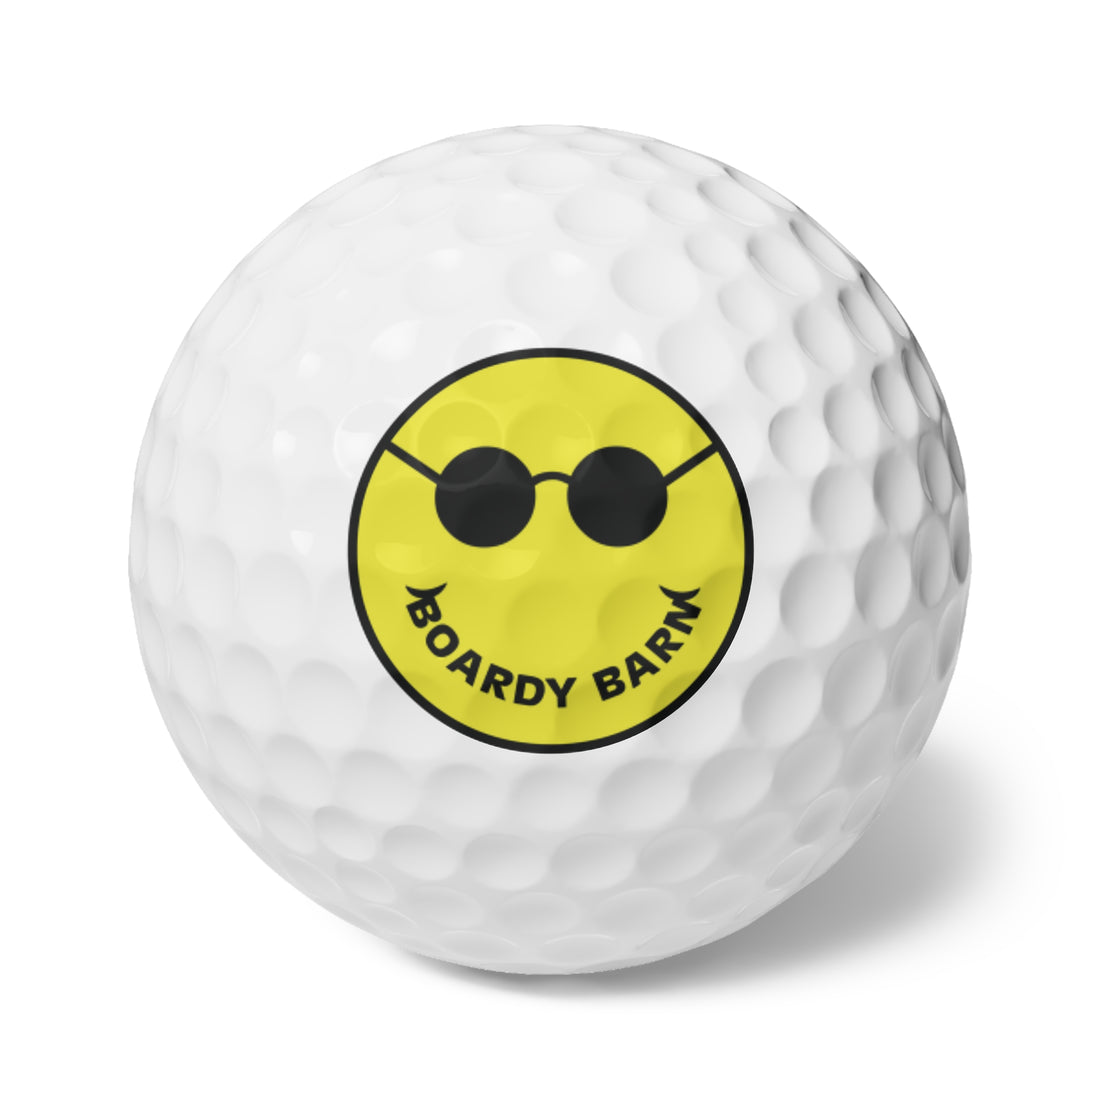 
  
  Boardy Barn Smiley Face Golf Balls, 6pcs
  
